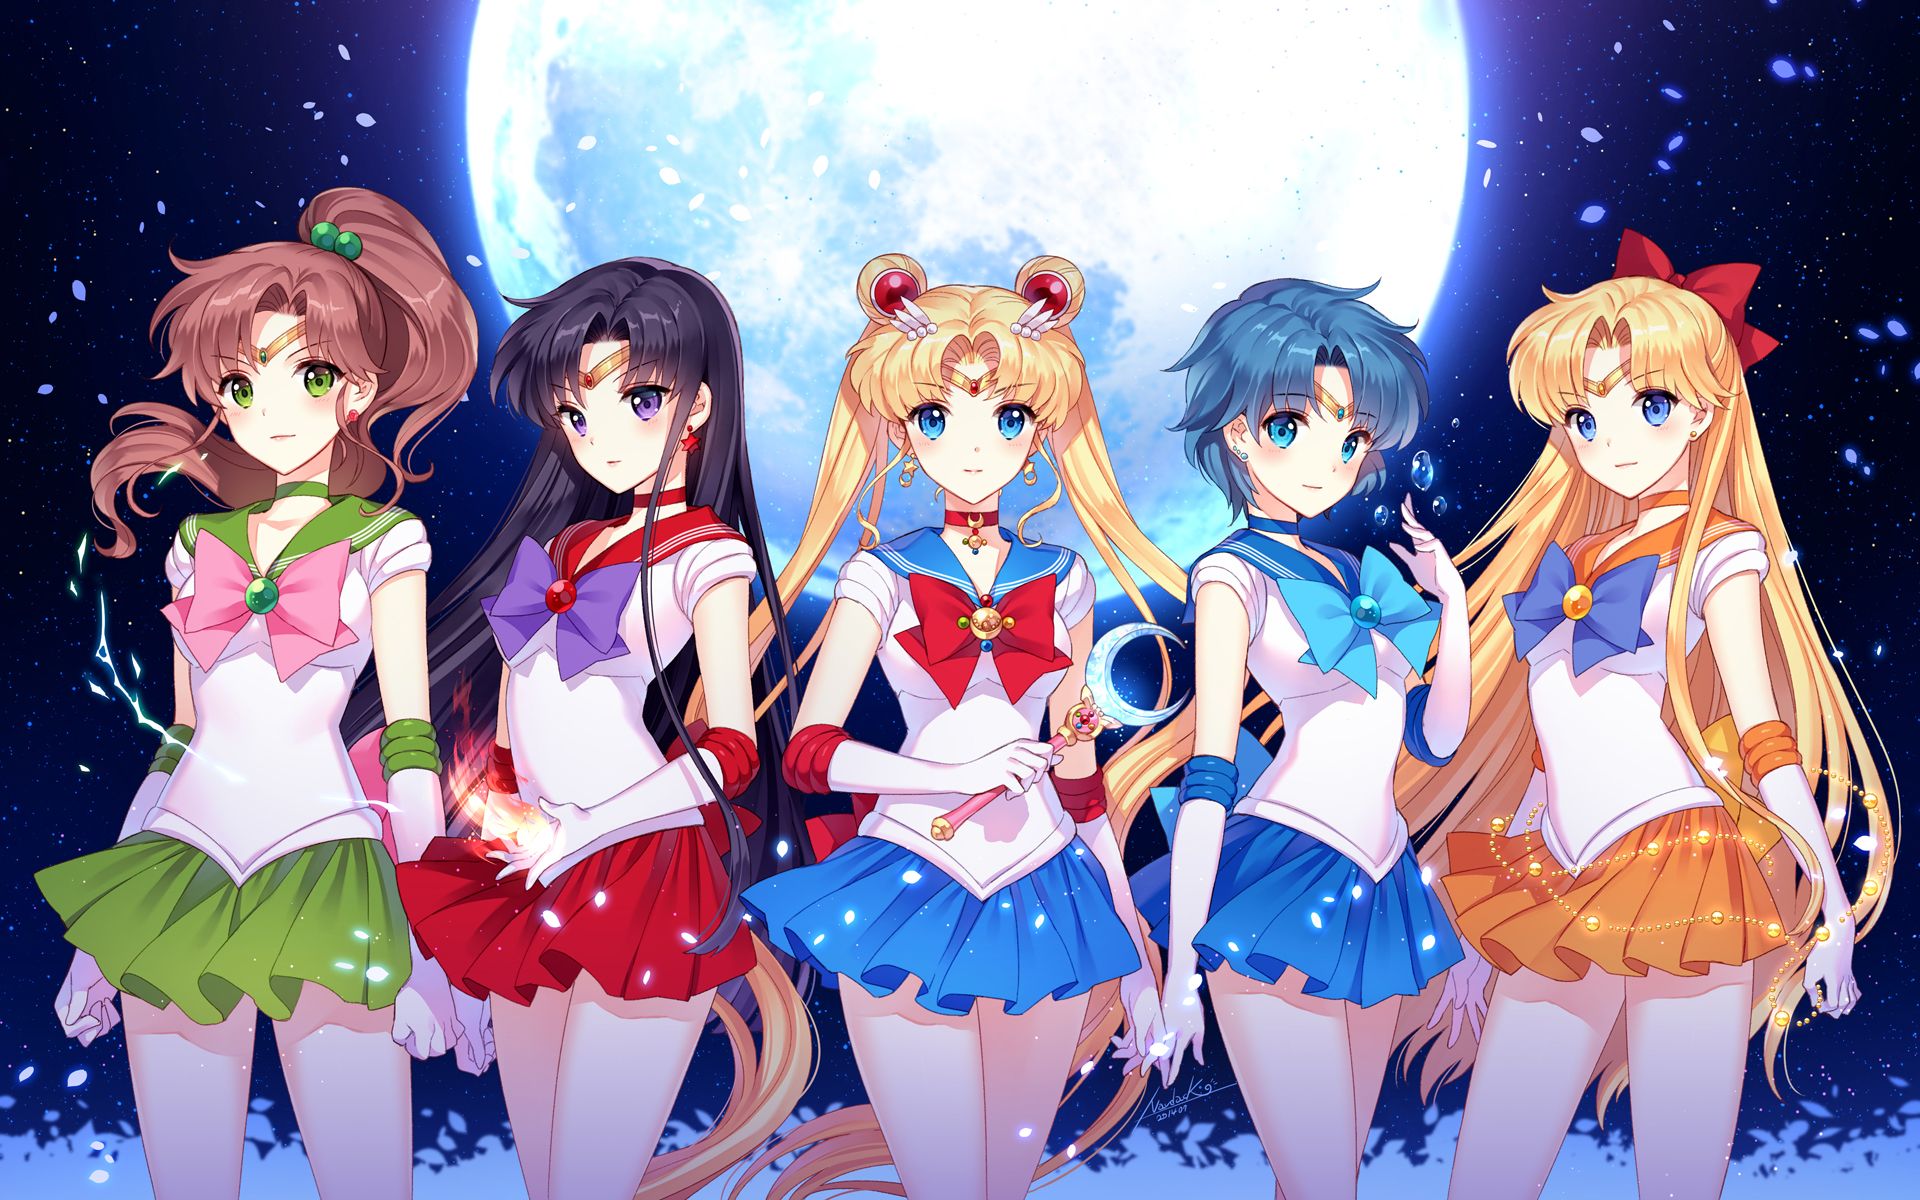 Bishoujo Senshi Sailor Moon (Pretty Guardian Sailor Moon) Anime Image Board